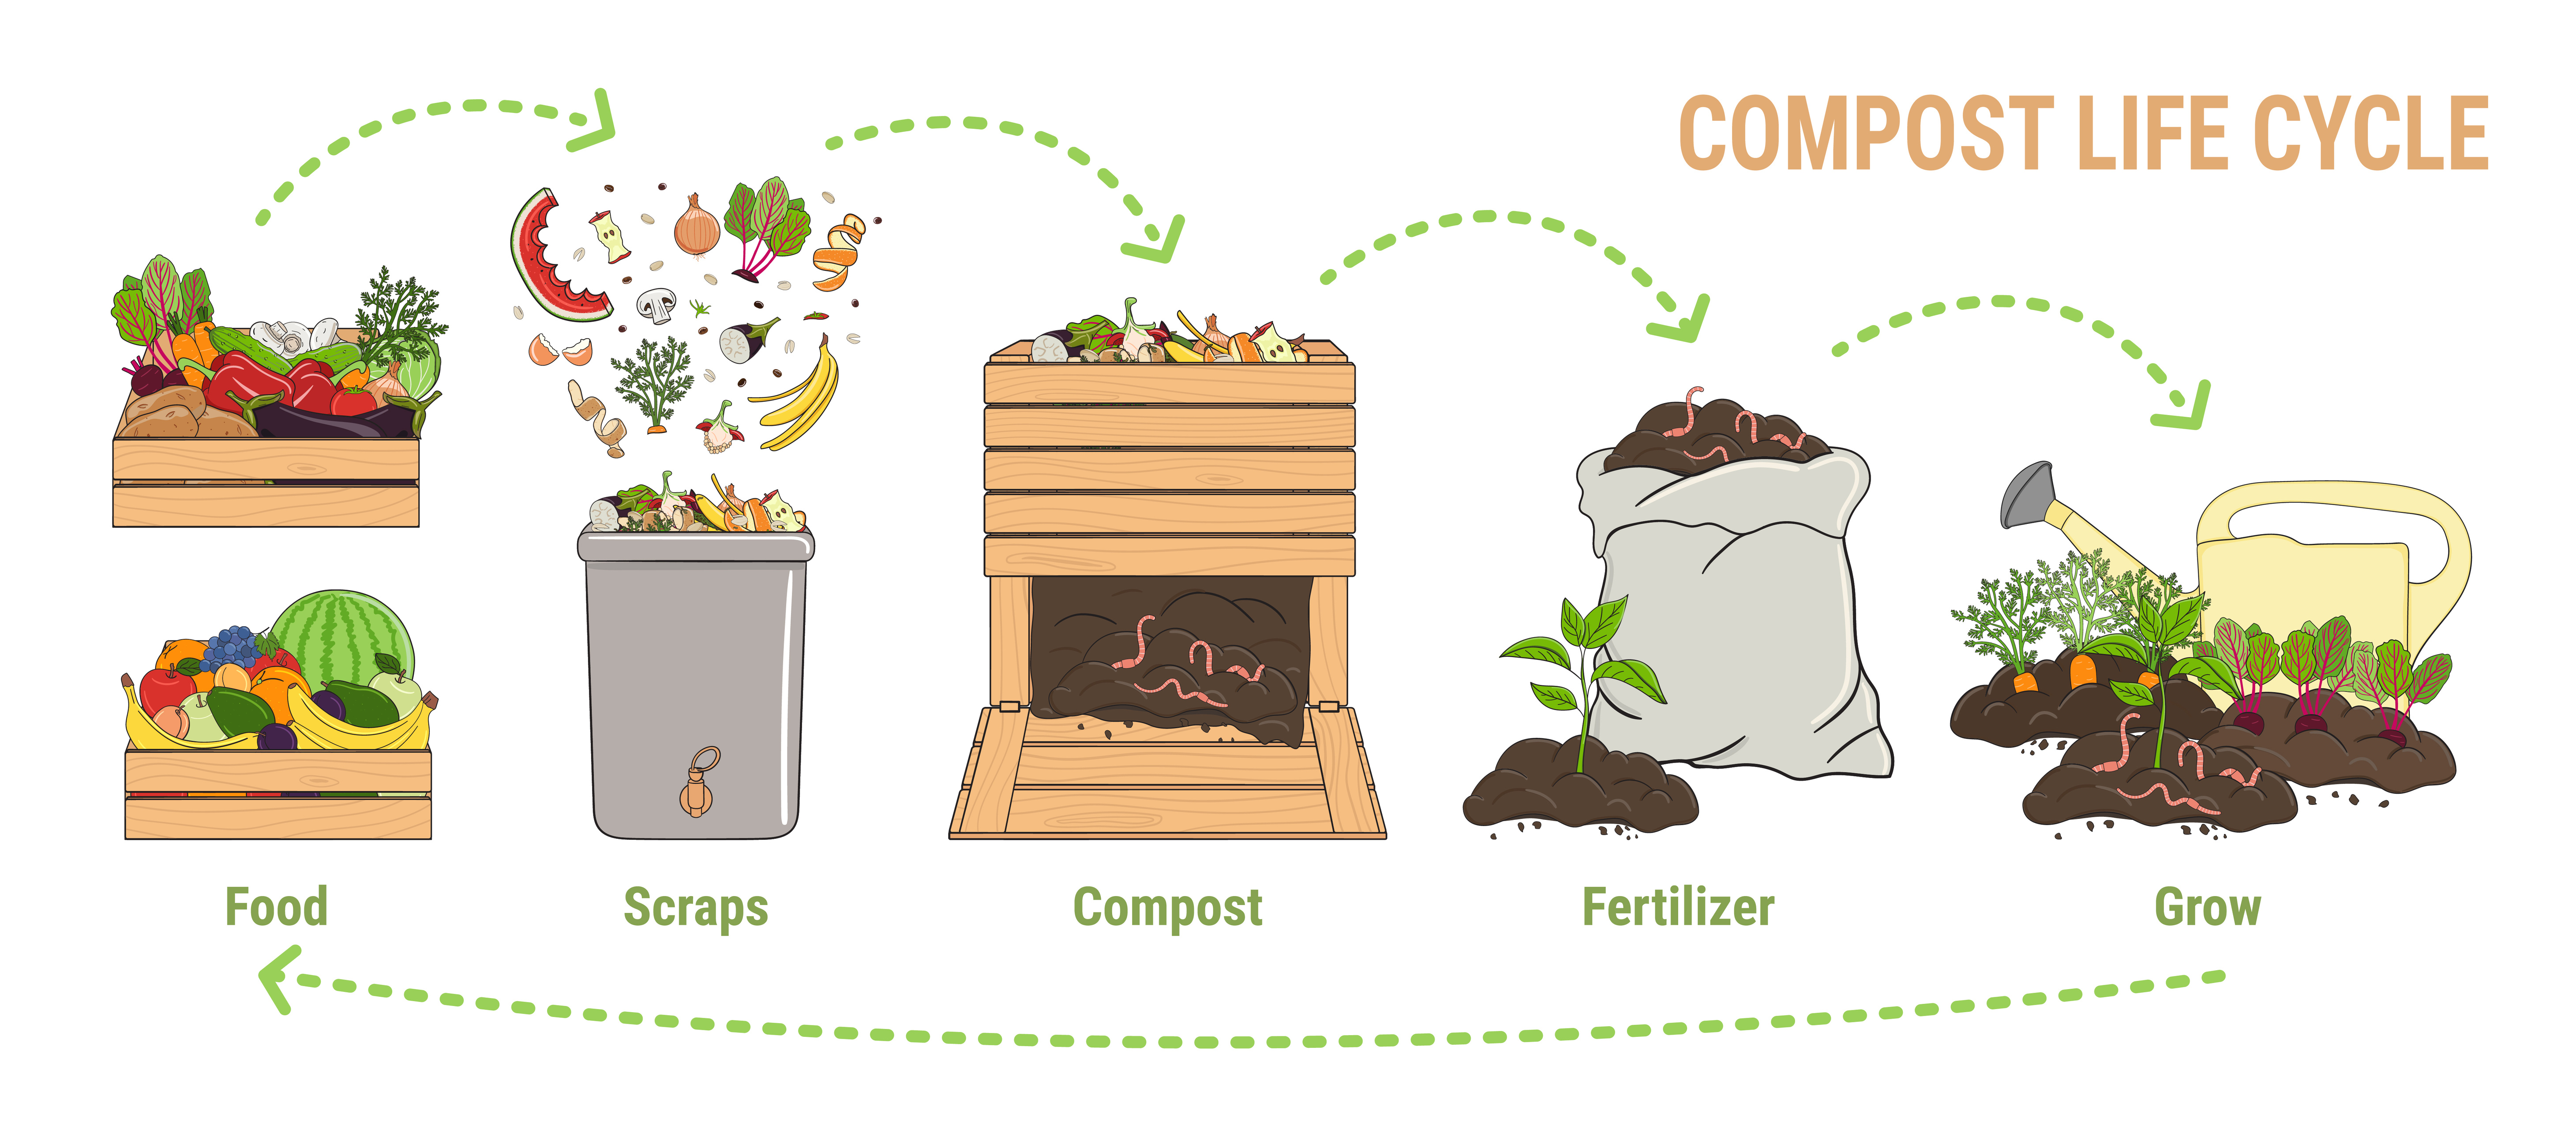 Composting at home food waste 